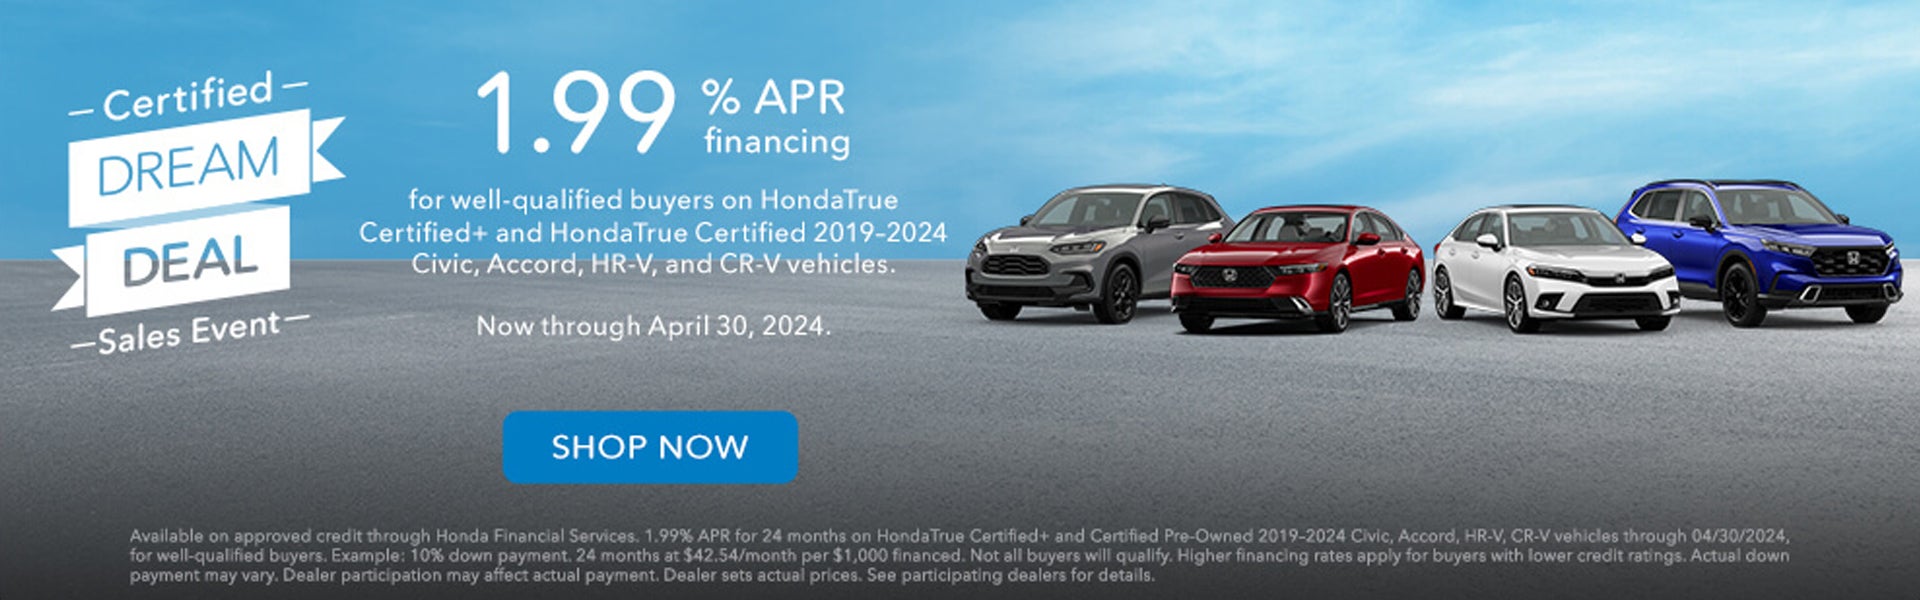 Honda Certified Dream Deal Sales Event